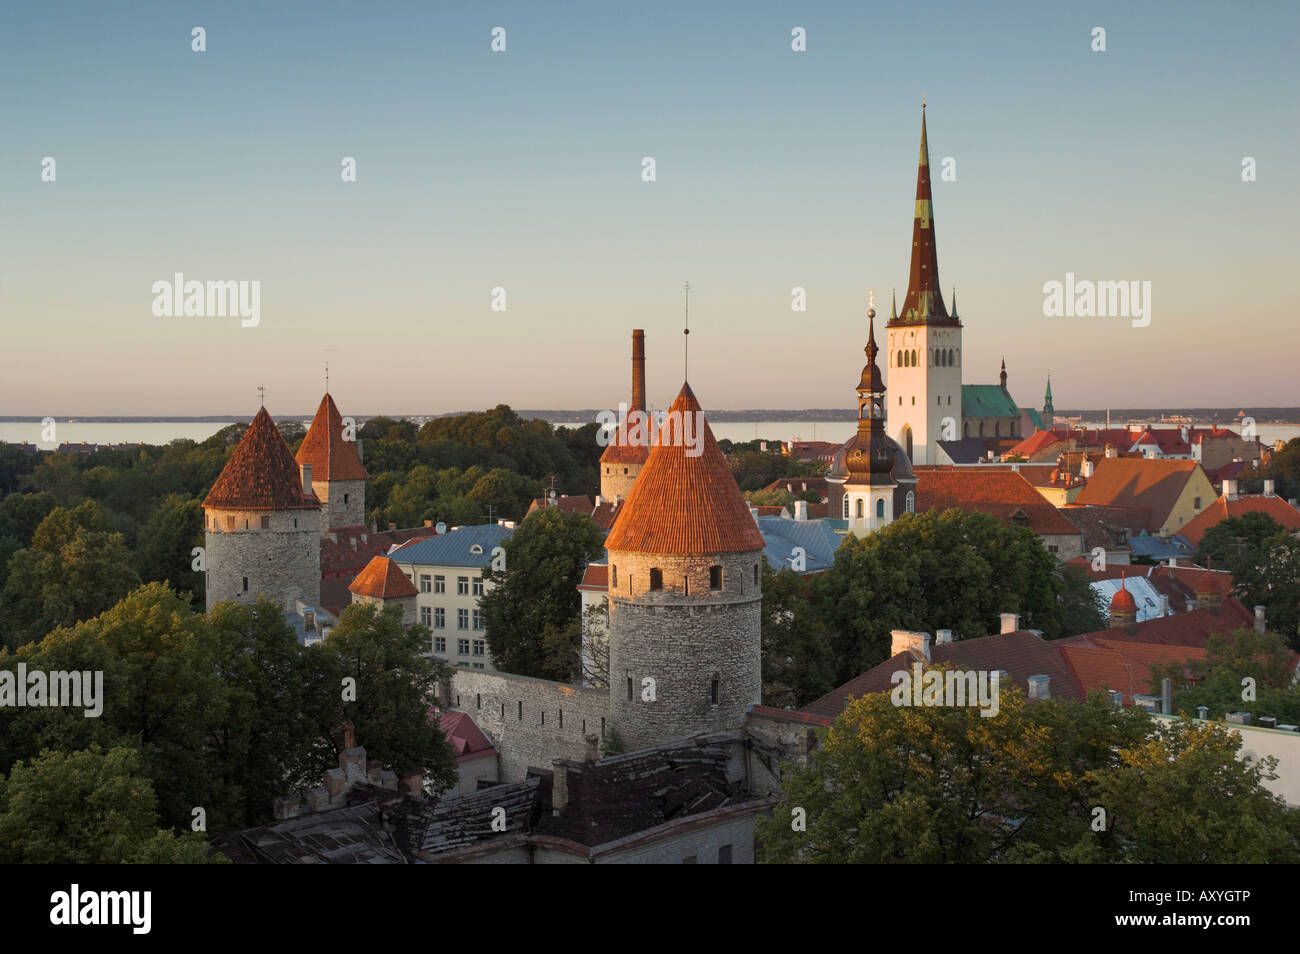 Medieval town walls and spire of St. Olavs church at dusk, Tallinn, Estonia, Baltic States, Europe Stock Photo